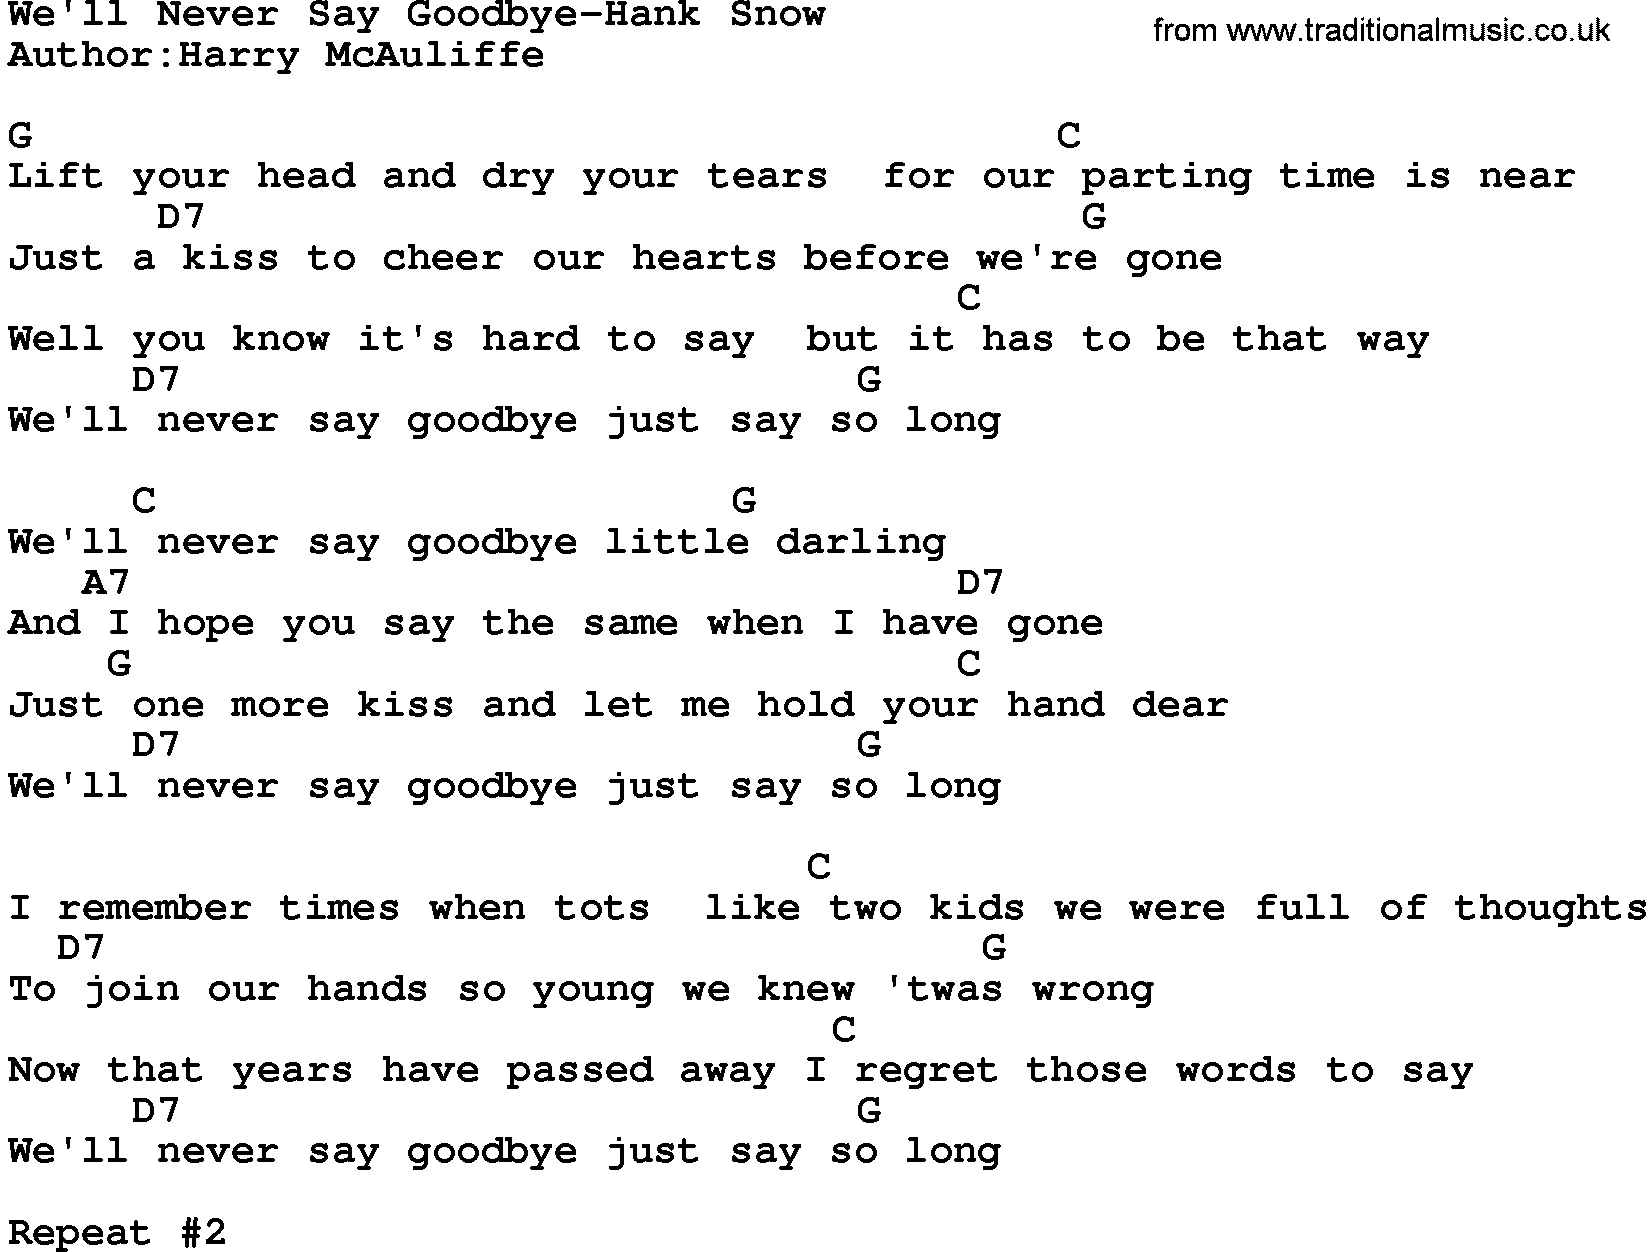 Country music song: We'll Never Say Goodbye-Hank Snow lyrics and chords